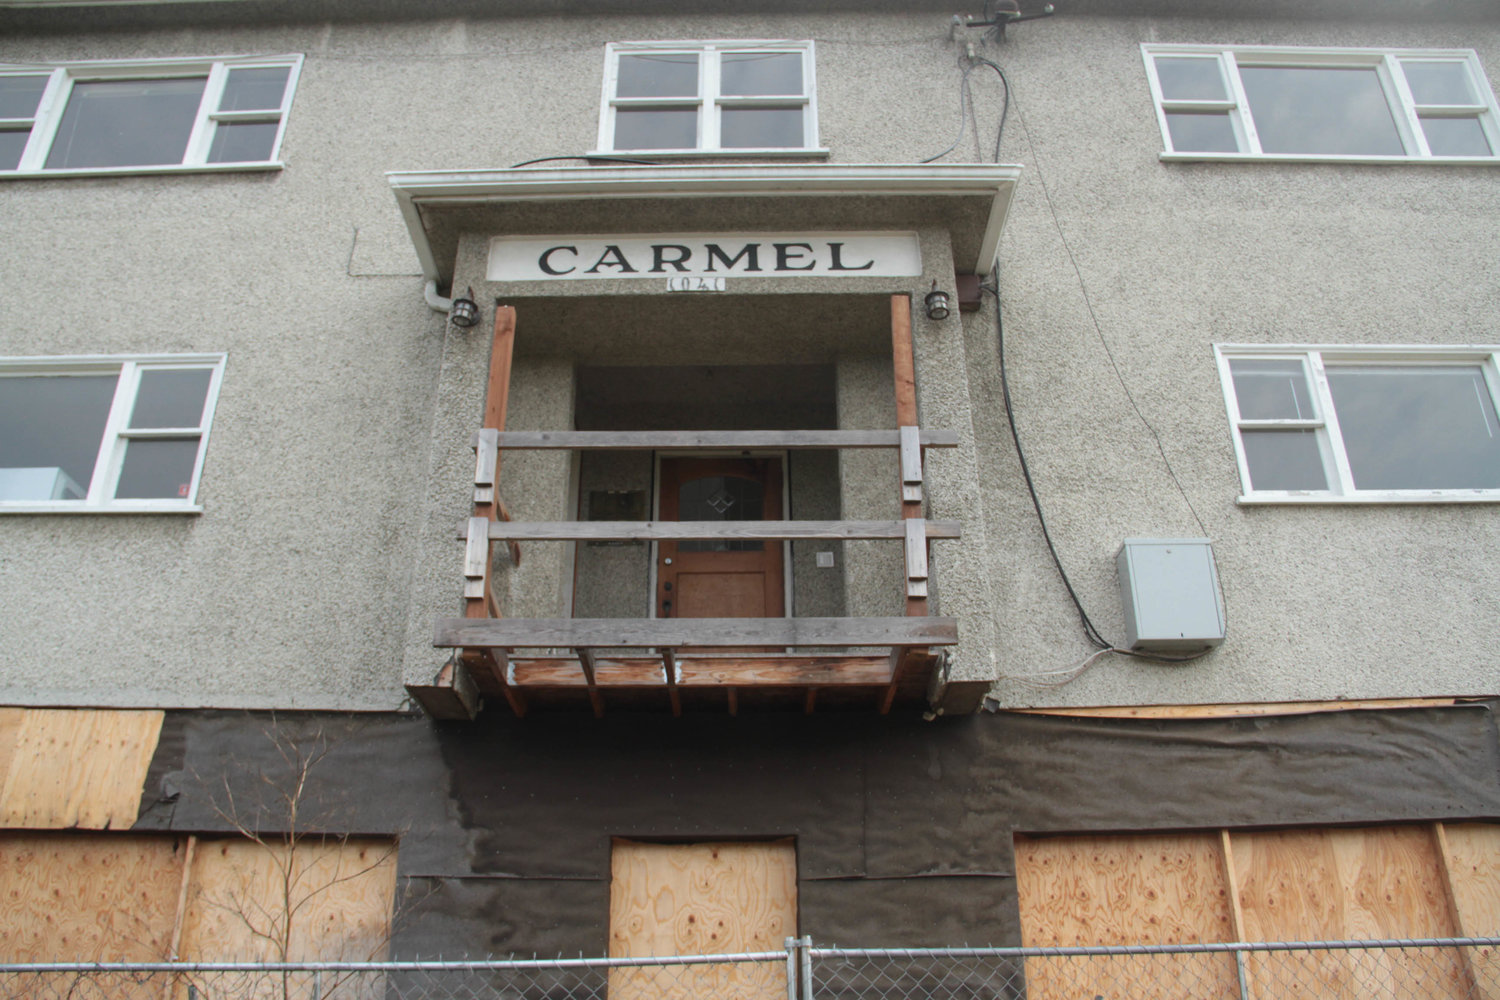 The former Carmel Building.